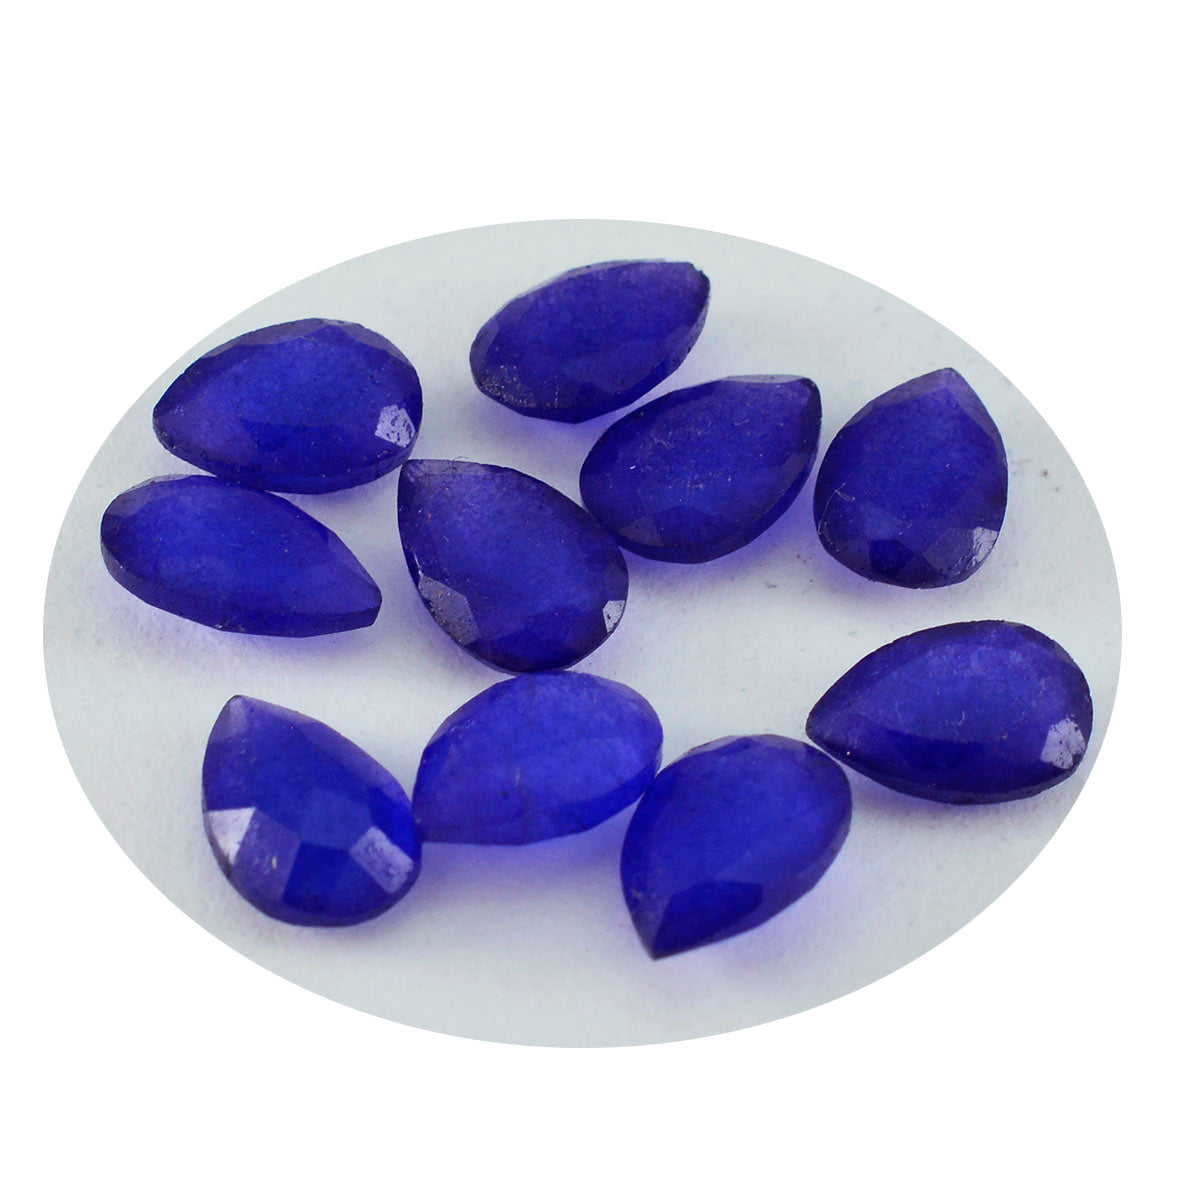 Riyogems 1PC Real Blue Jasper Faceted 3x5 mm Pear Shape pretty Quality Loose Gemstone